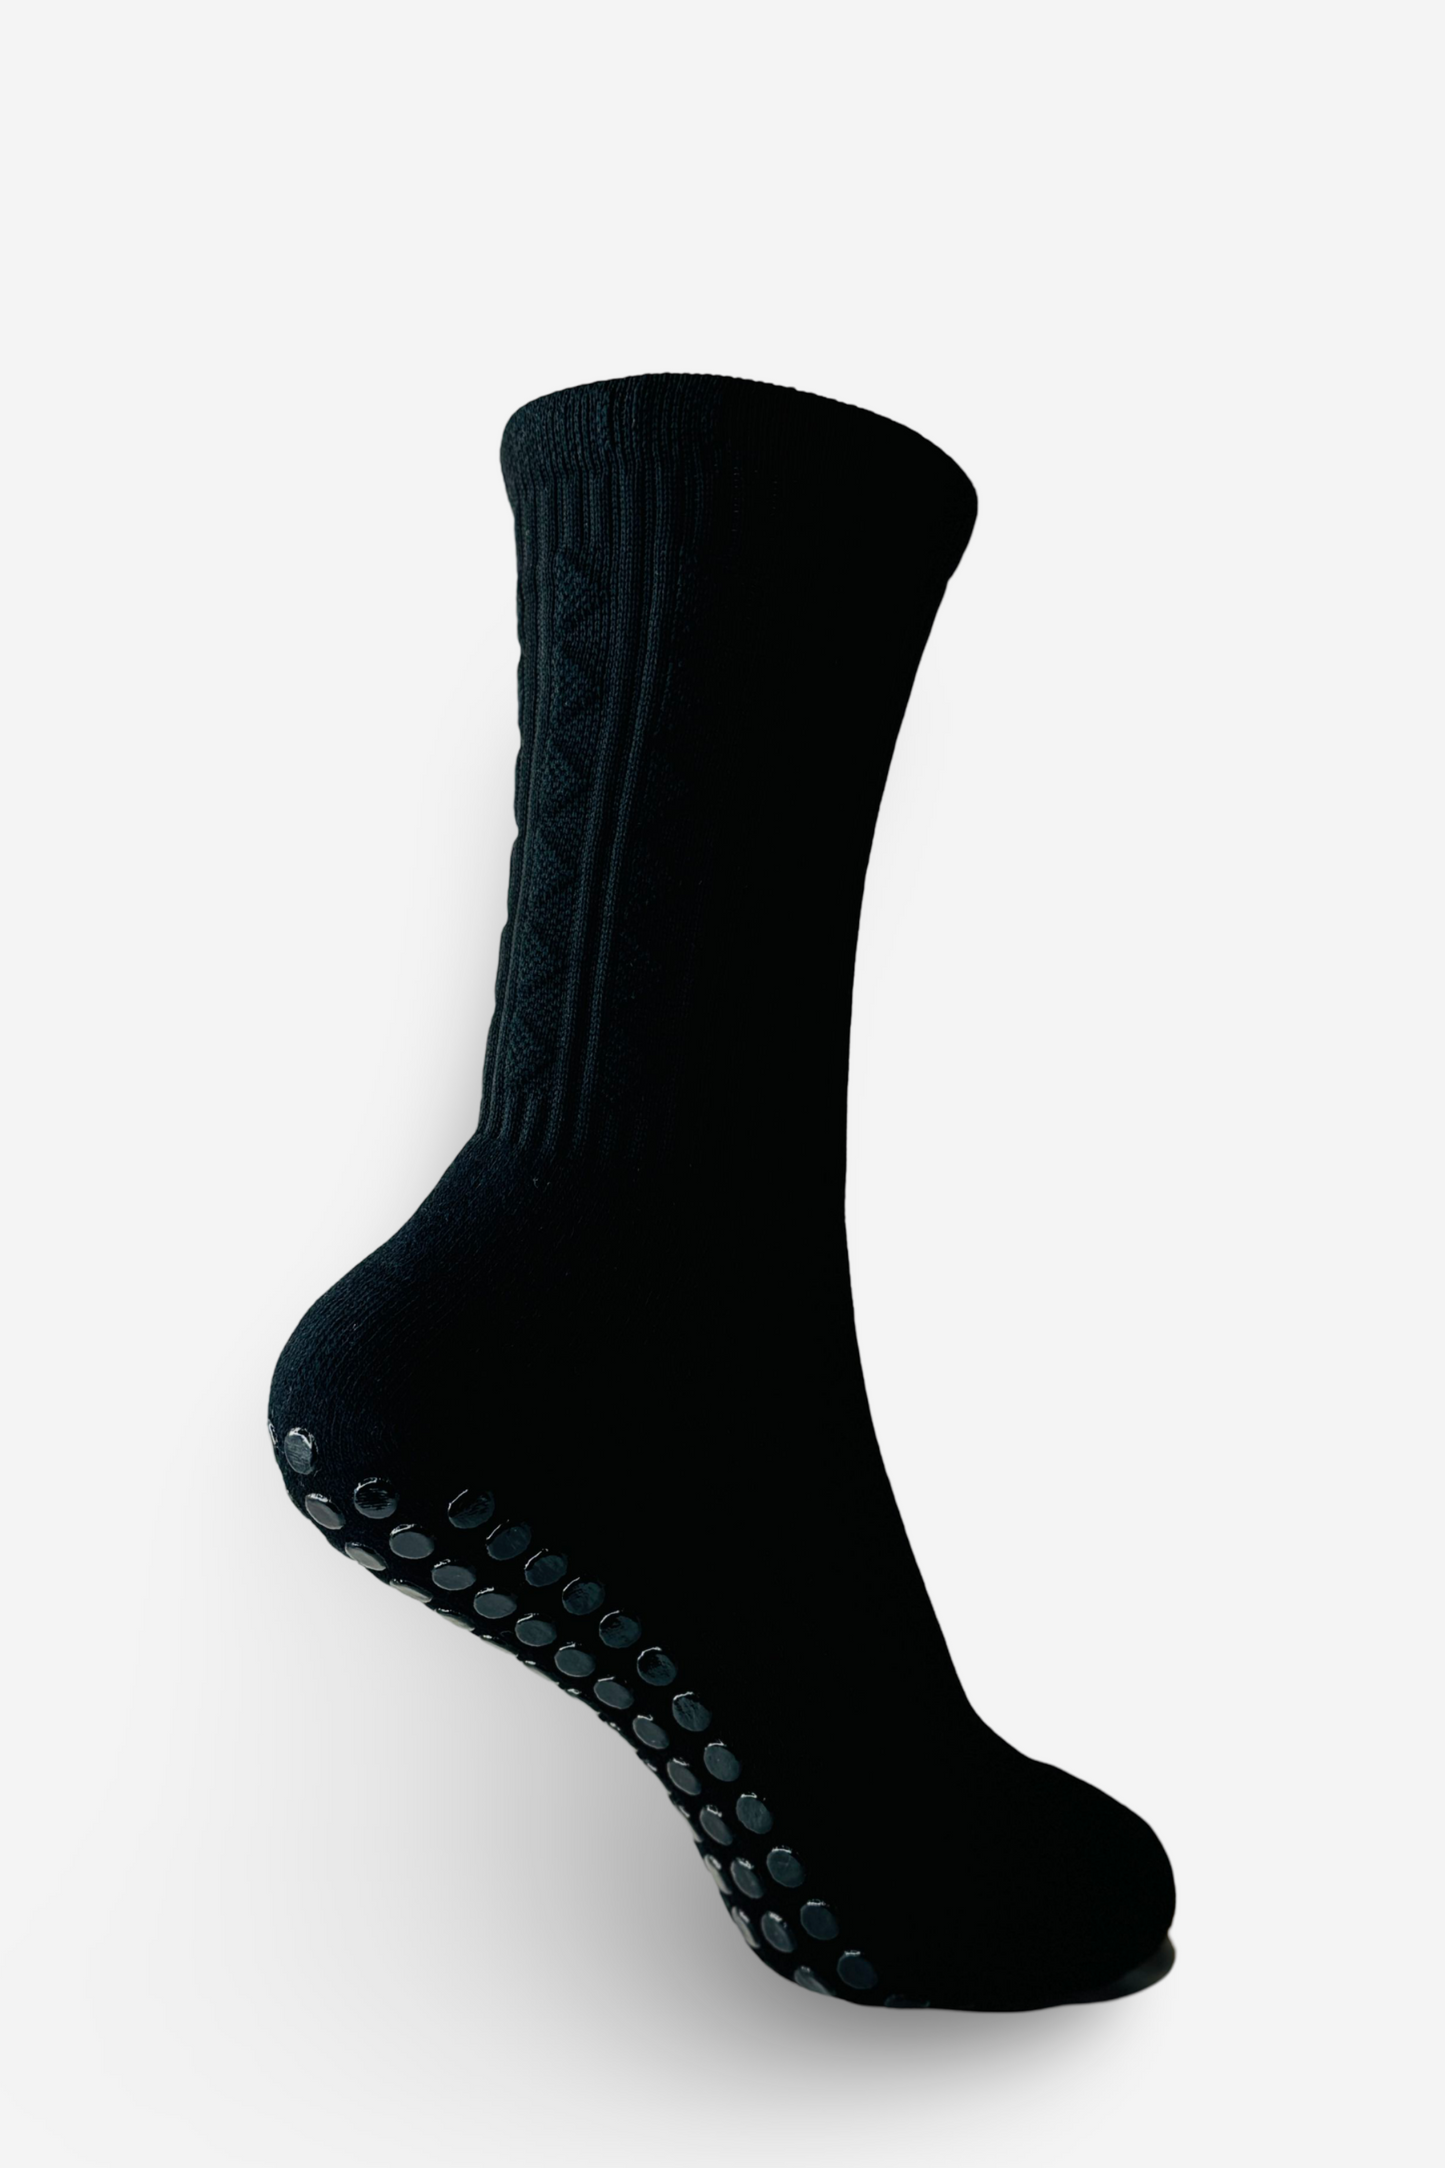 Anti-Slip Premium Grip Socks for Football - Blackout Edition